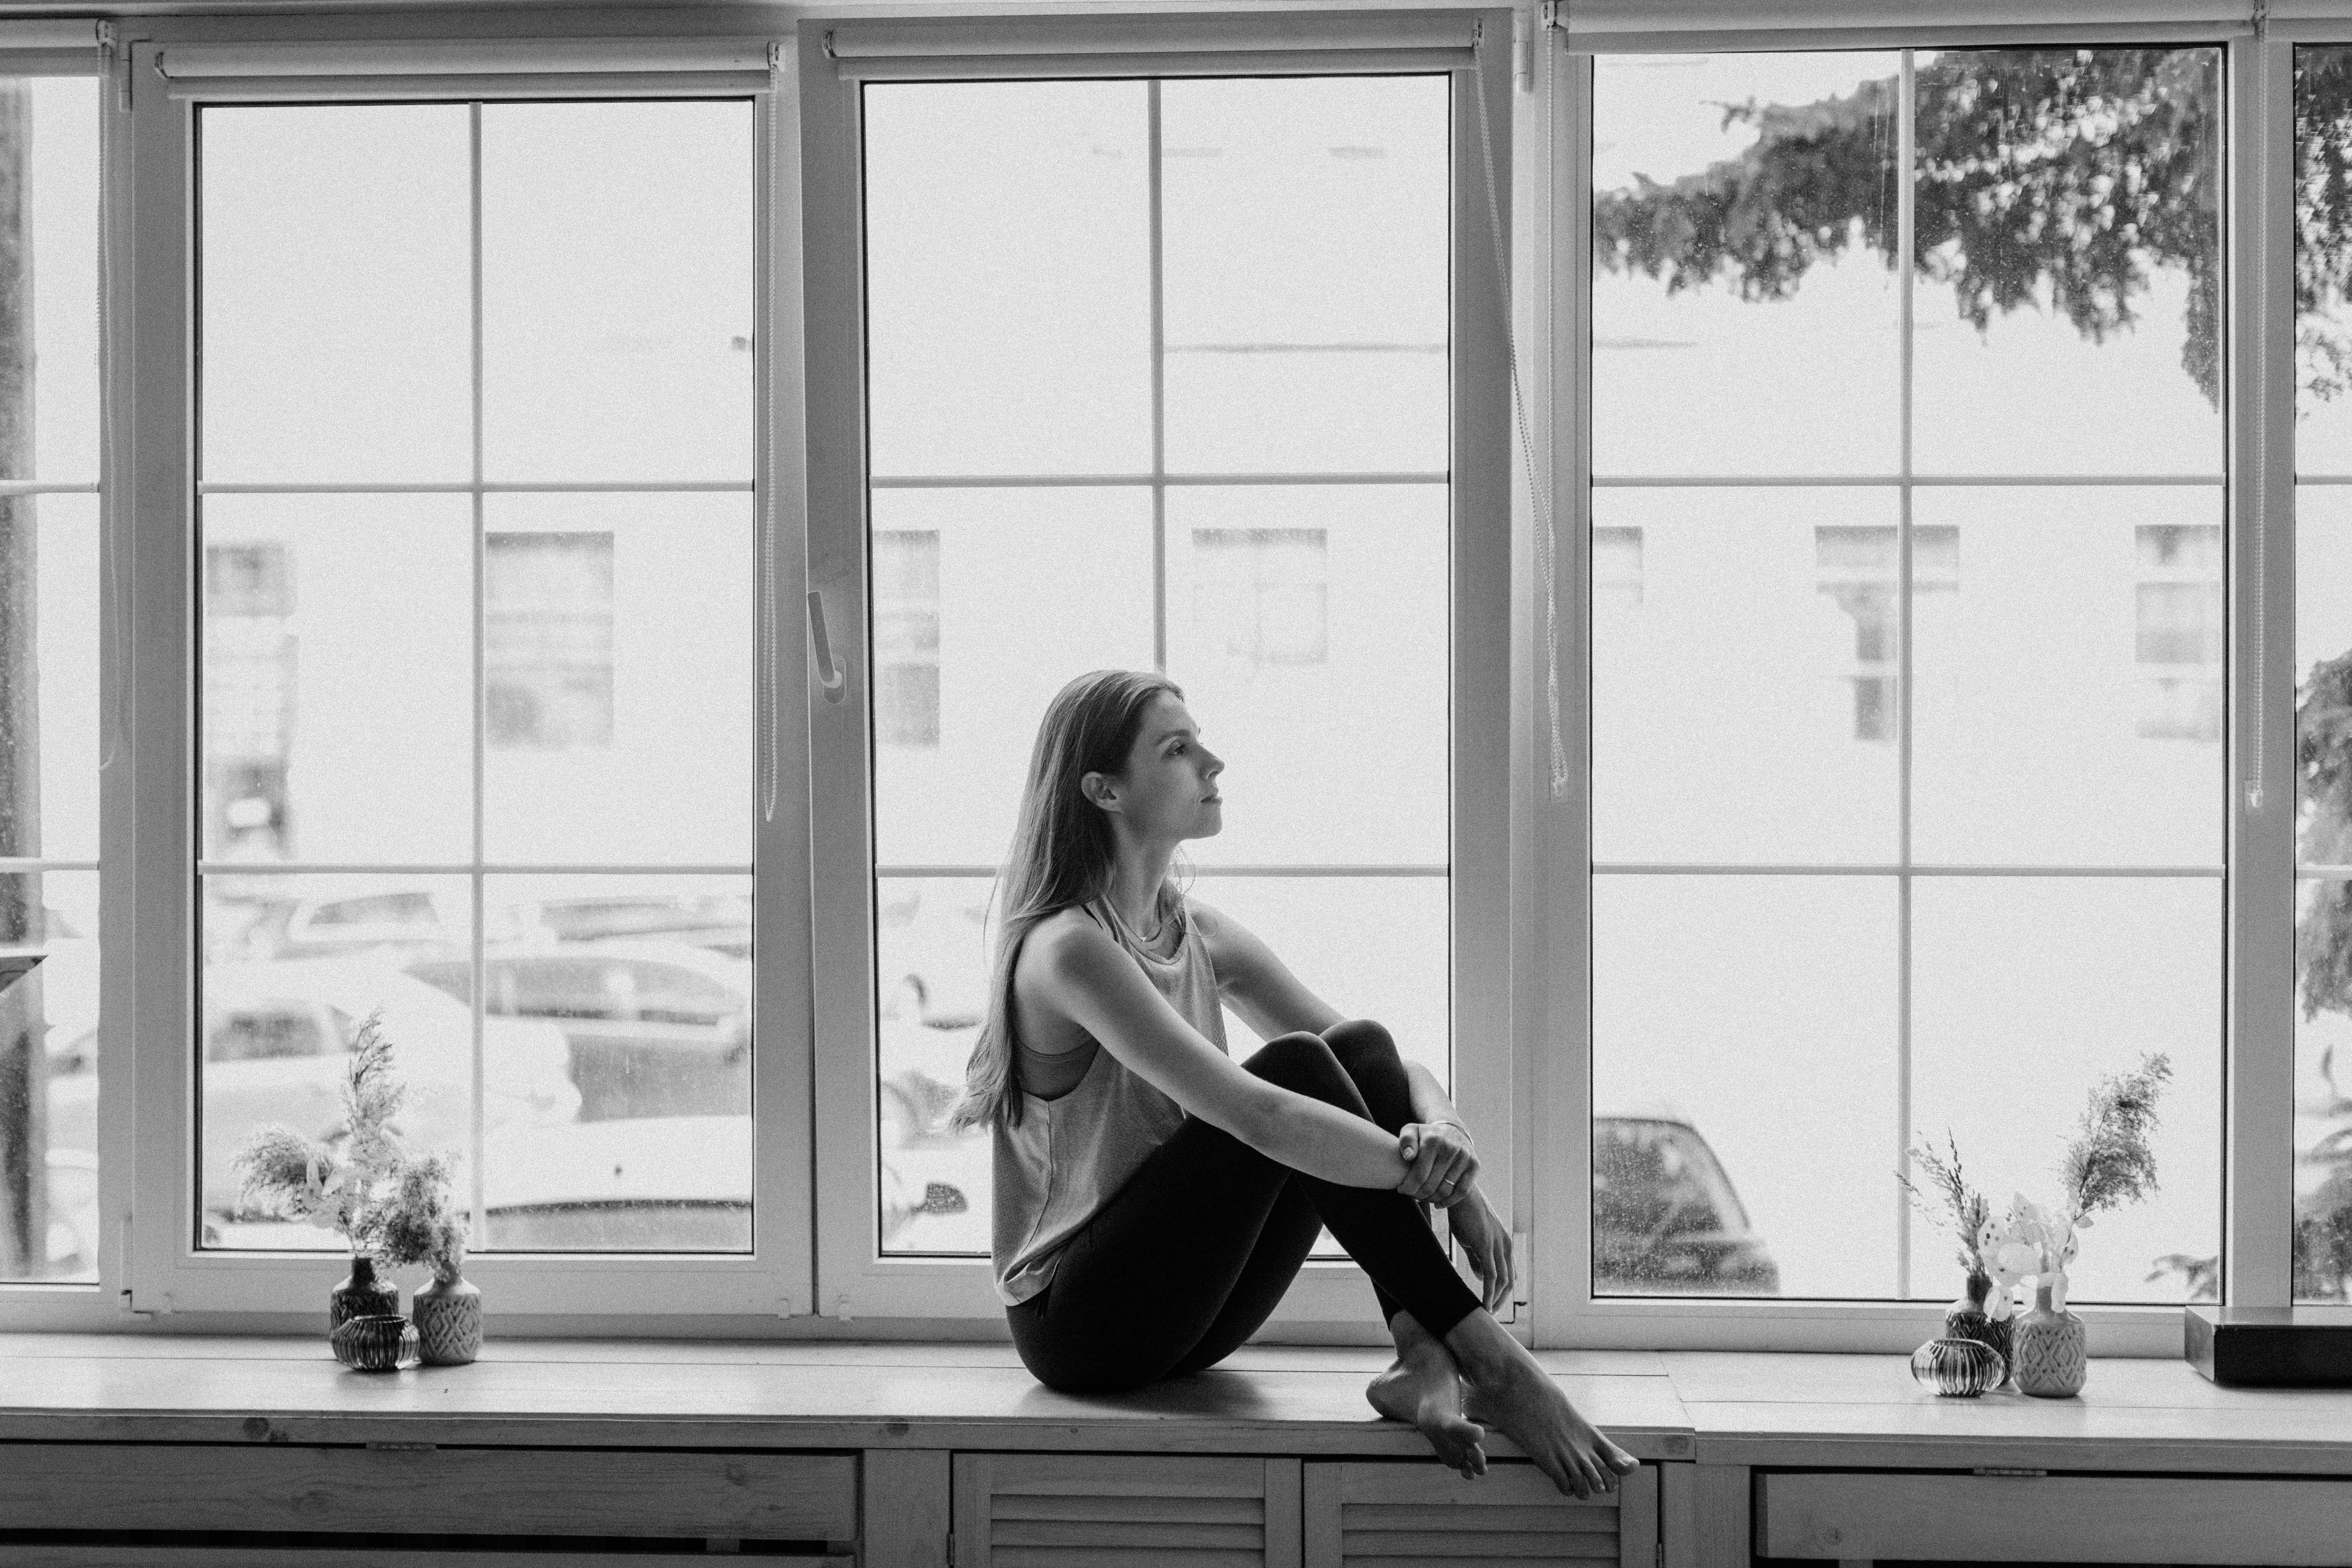 A woman sitting on the windowsill | Source: Pexels